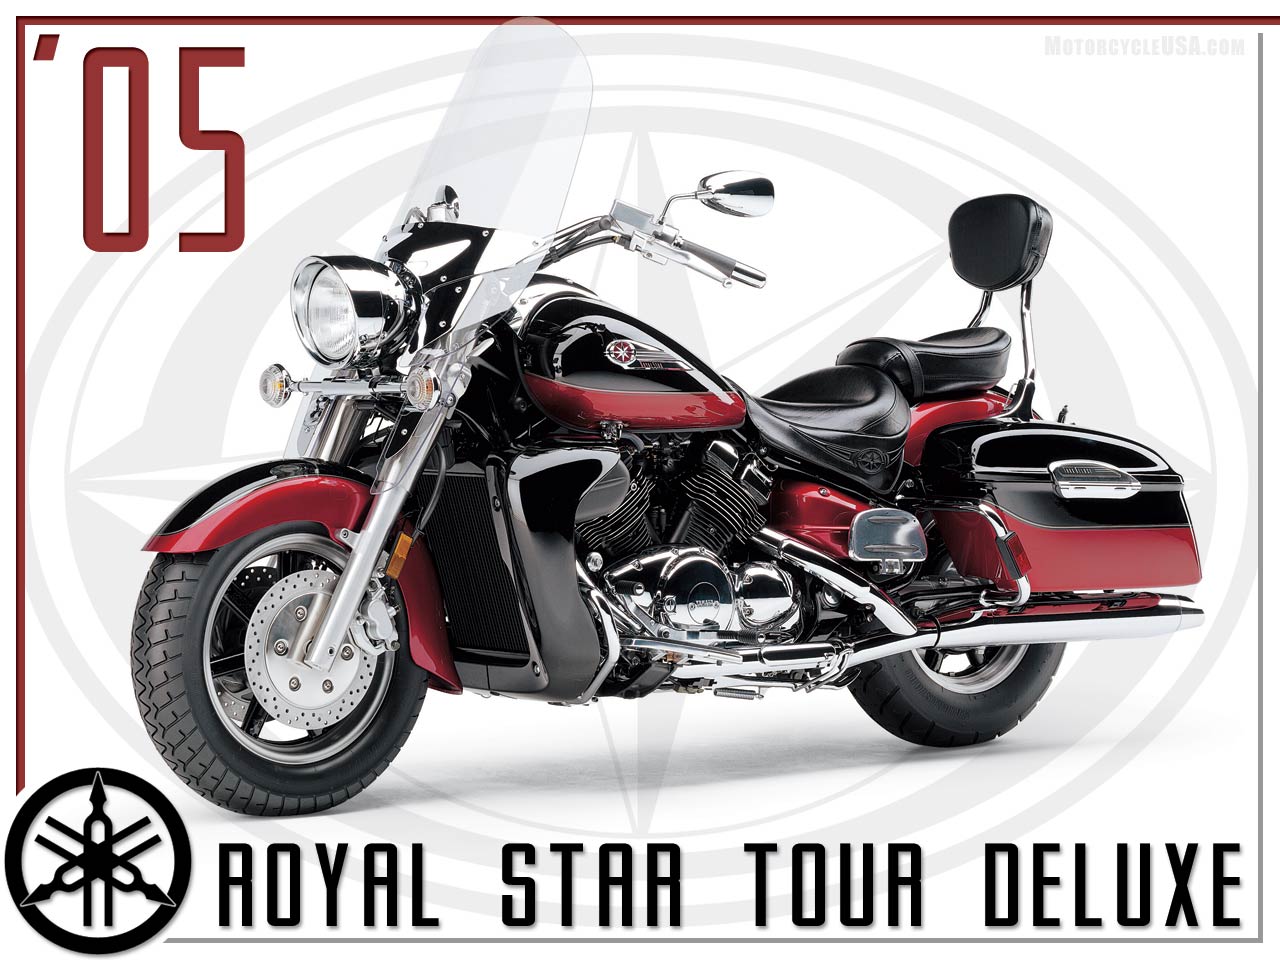 yamaha royal star tour deluxe-pic. 1